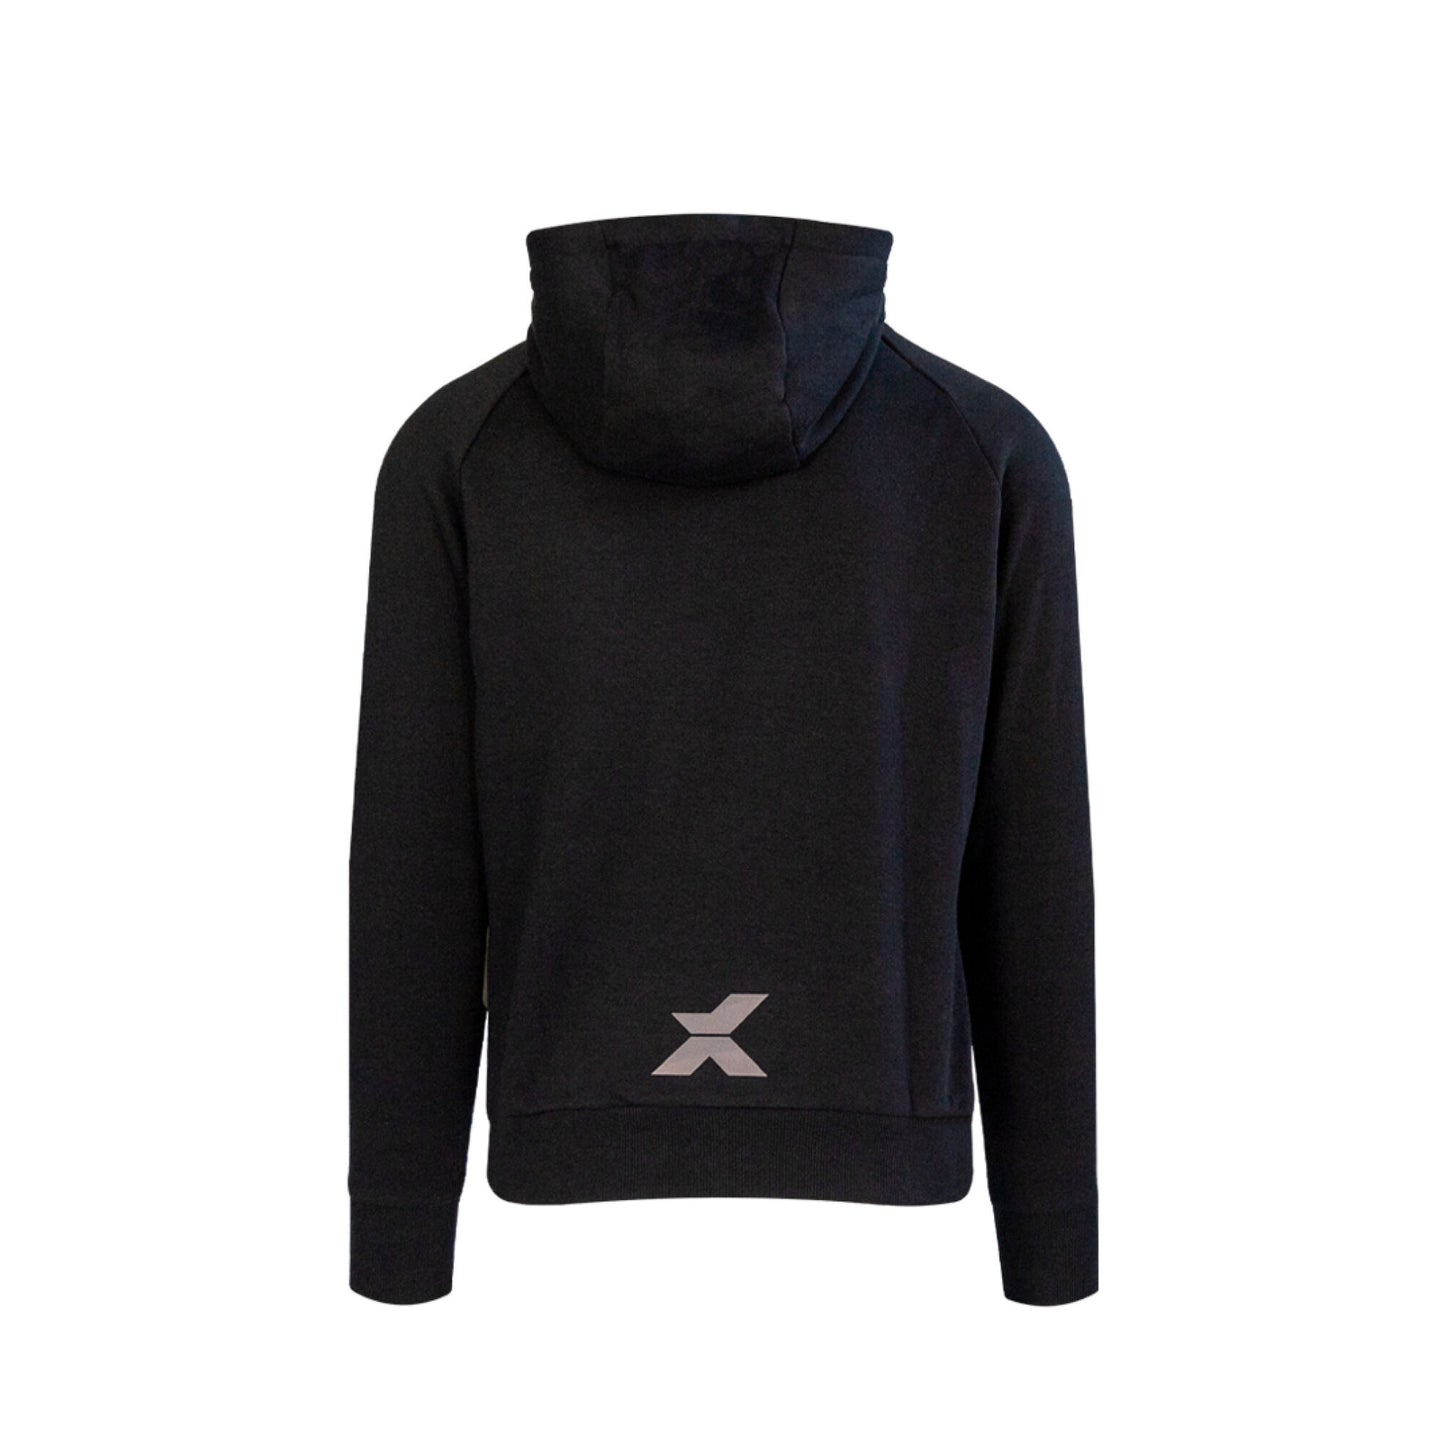 Xpert Pro Pullover Hoodie - Black